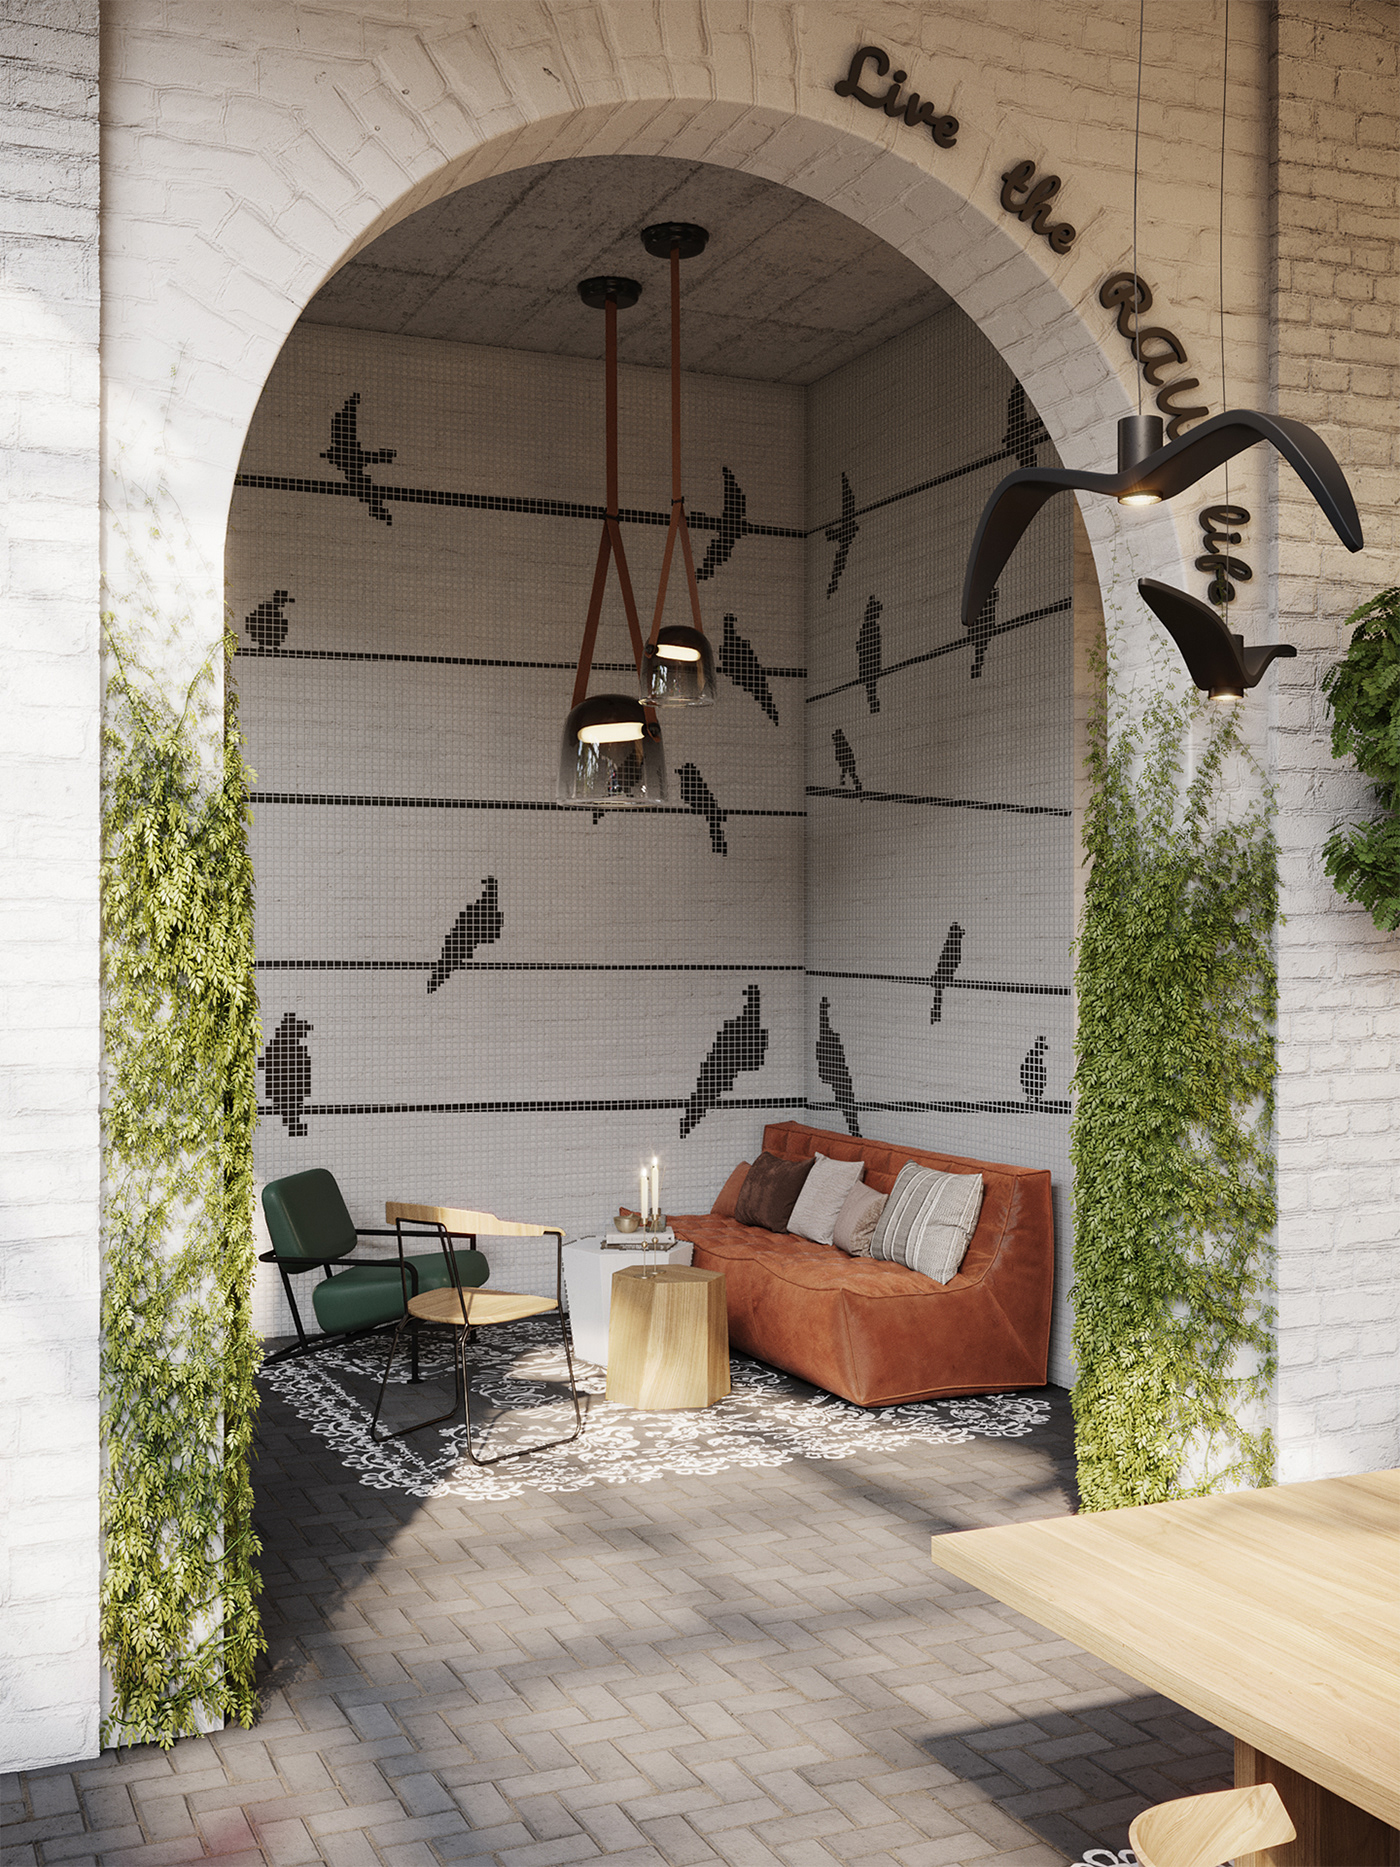 3D bar CGI commercial contemporary design greenhouse Interior raw restaurant